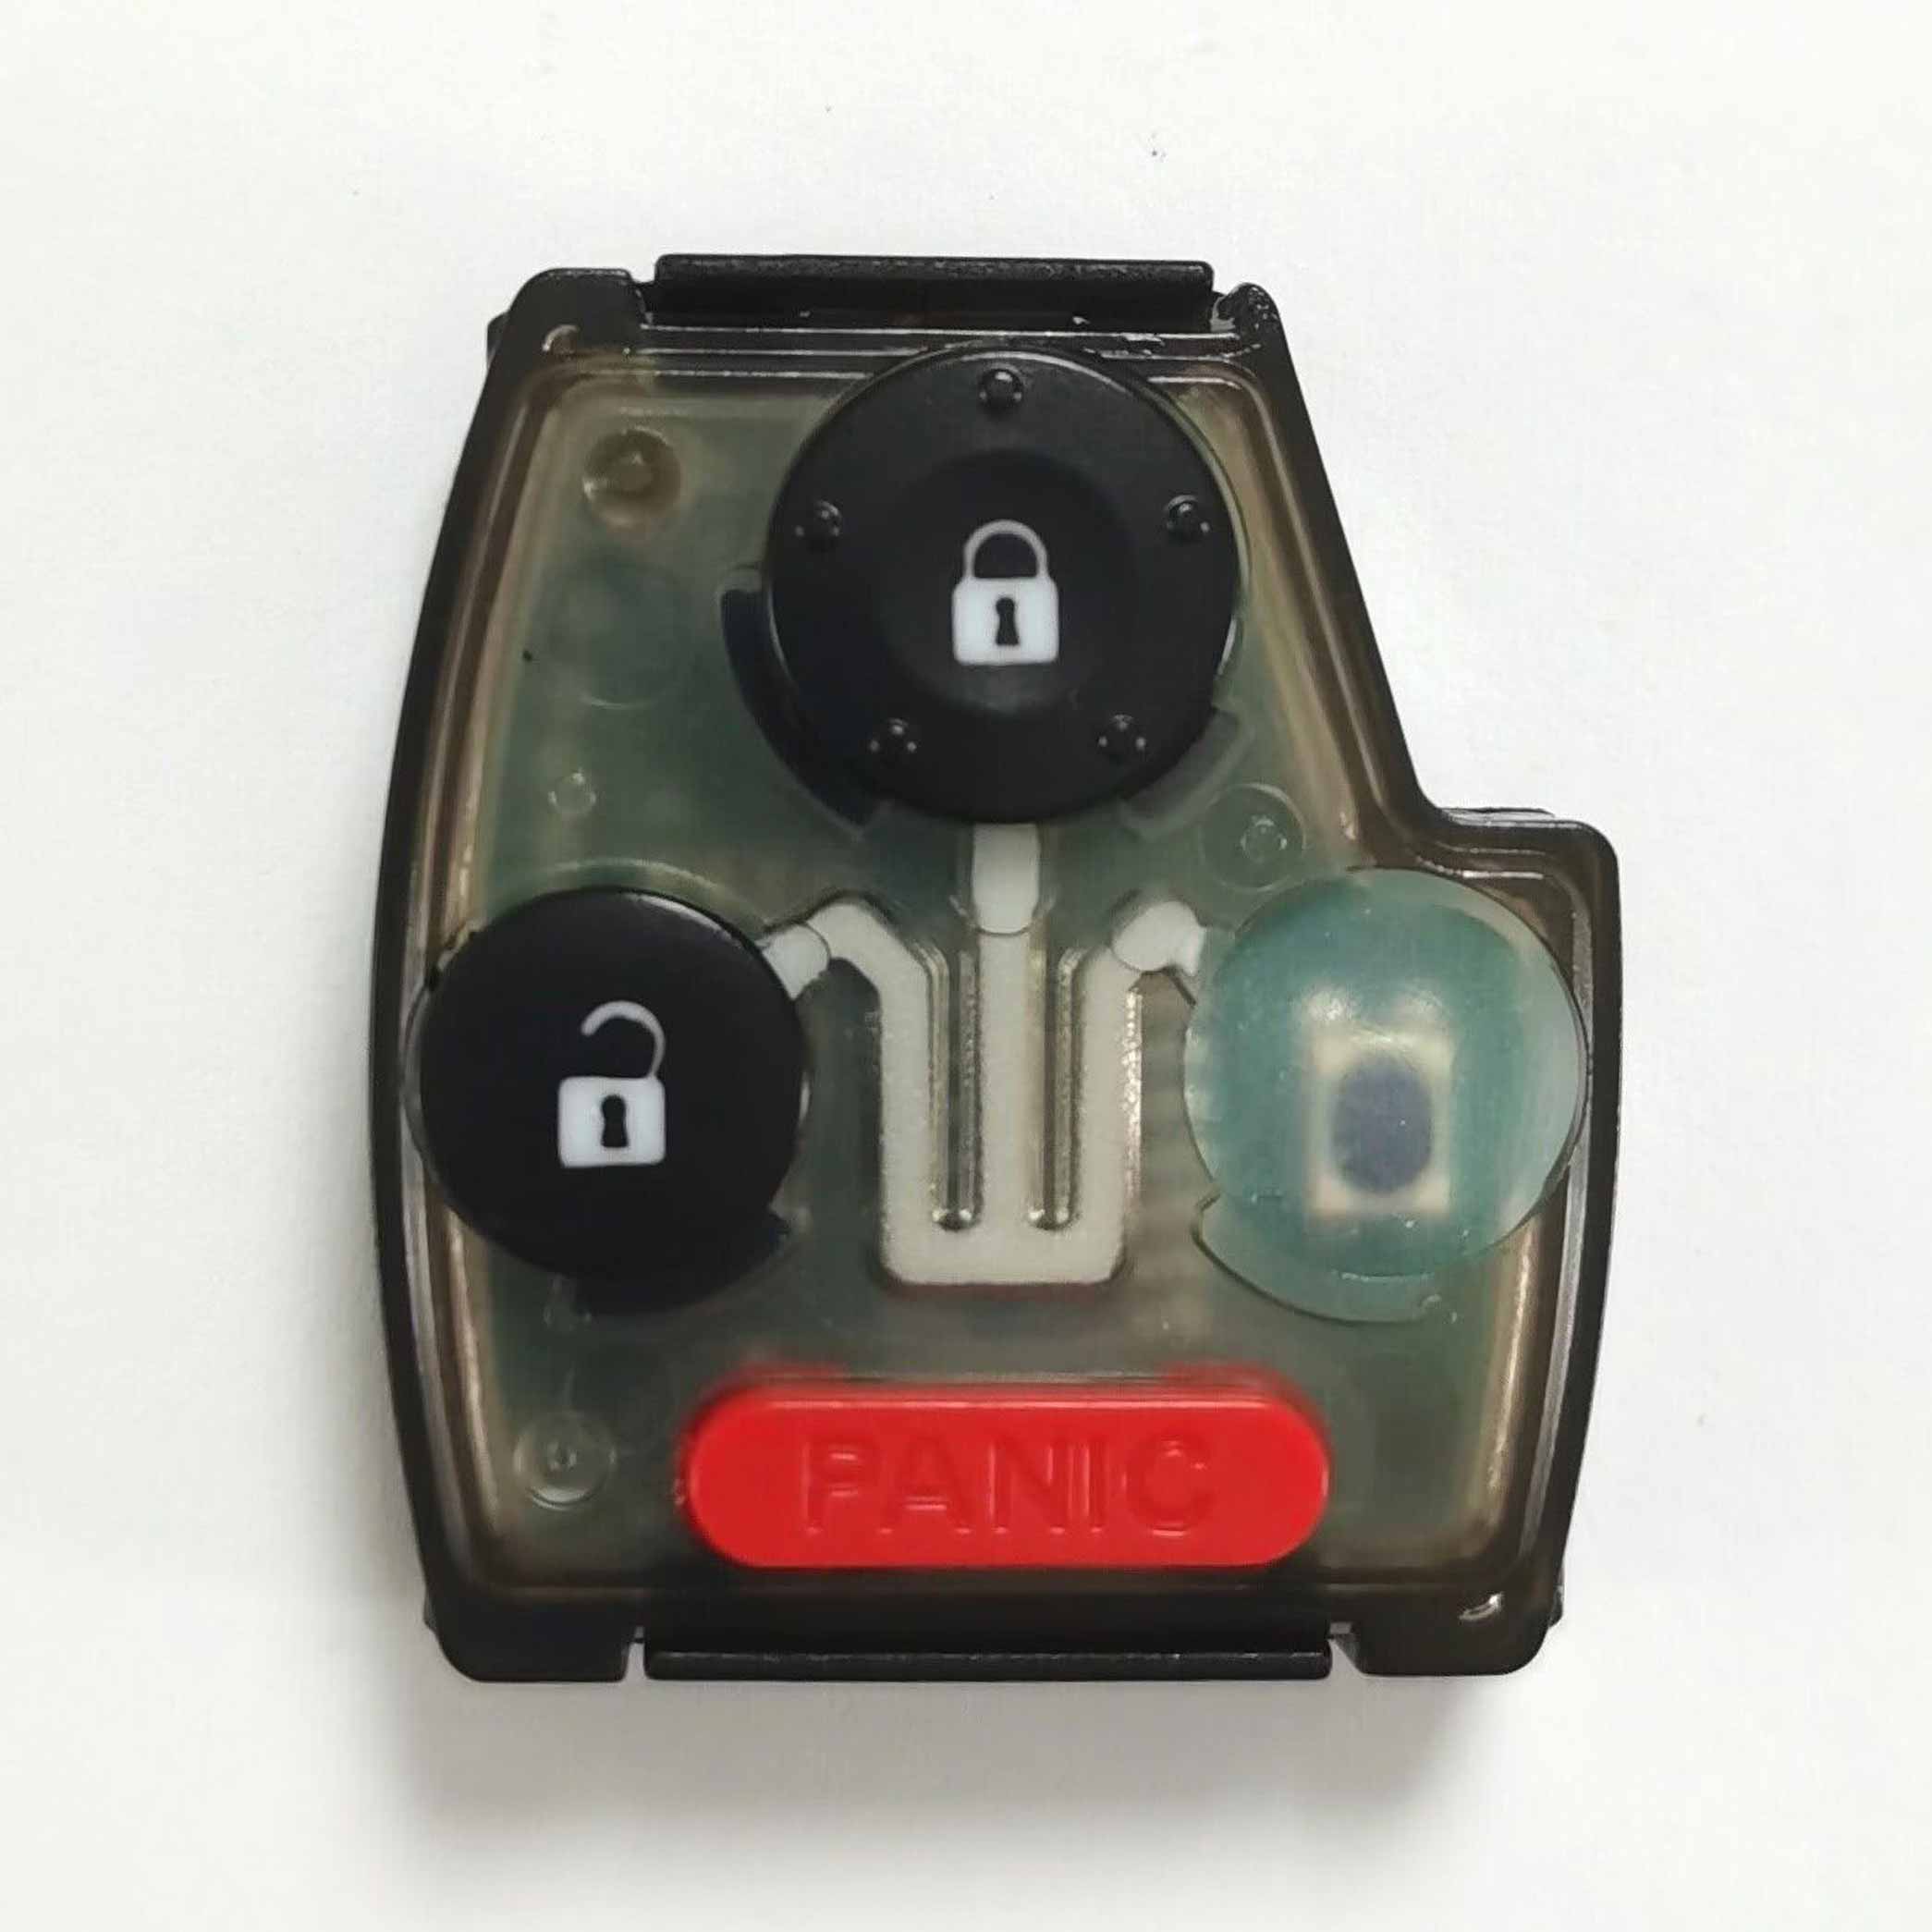 434 MHz 2+1 Buttons Remote Set for Honda Pilot